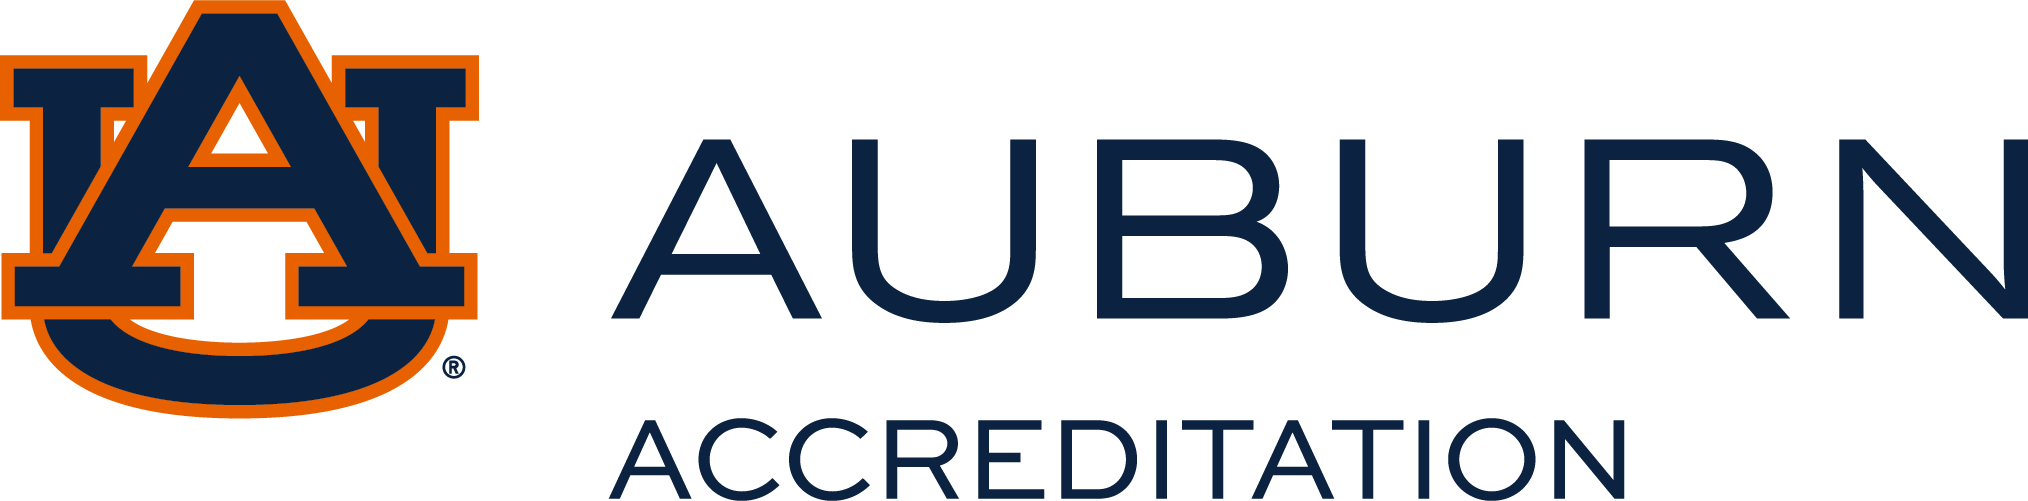 Auburn University logo